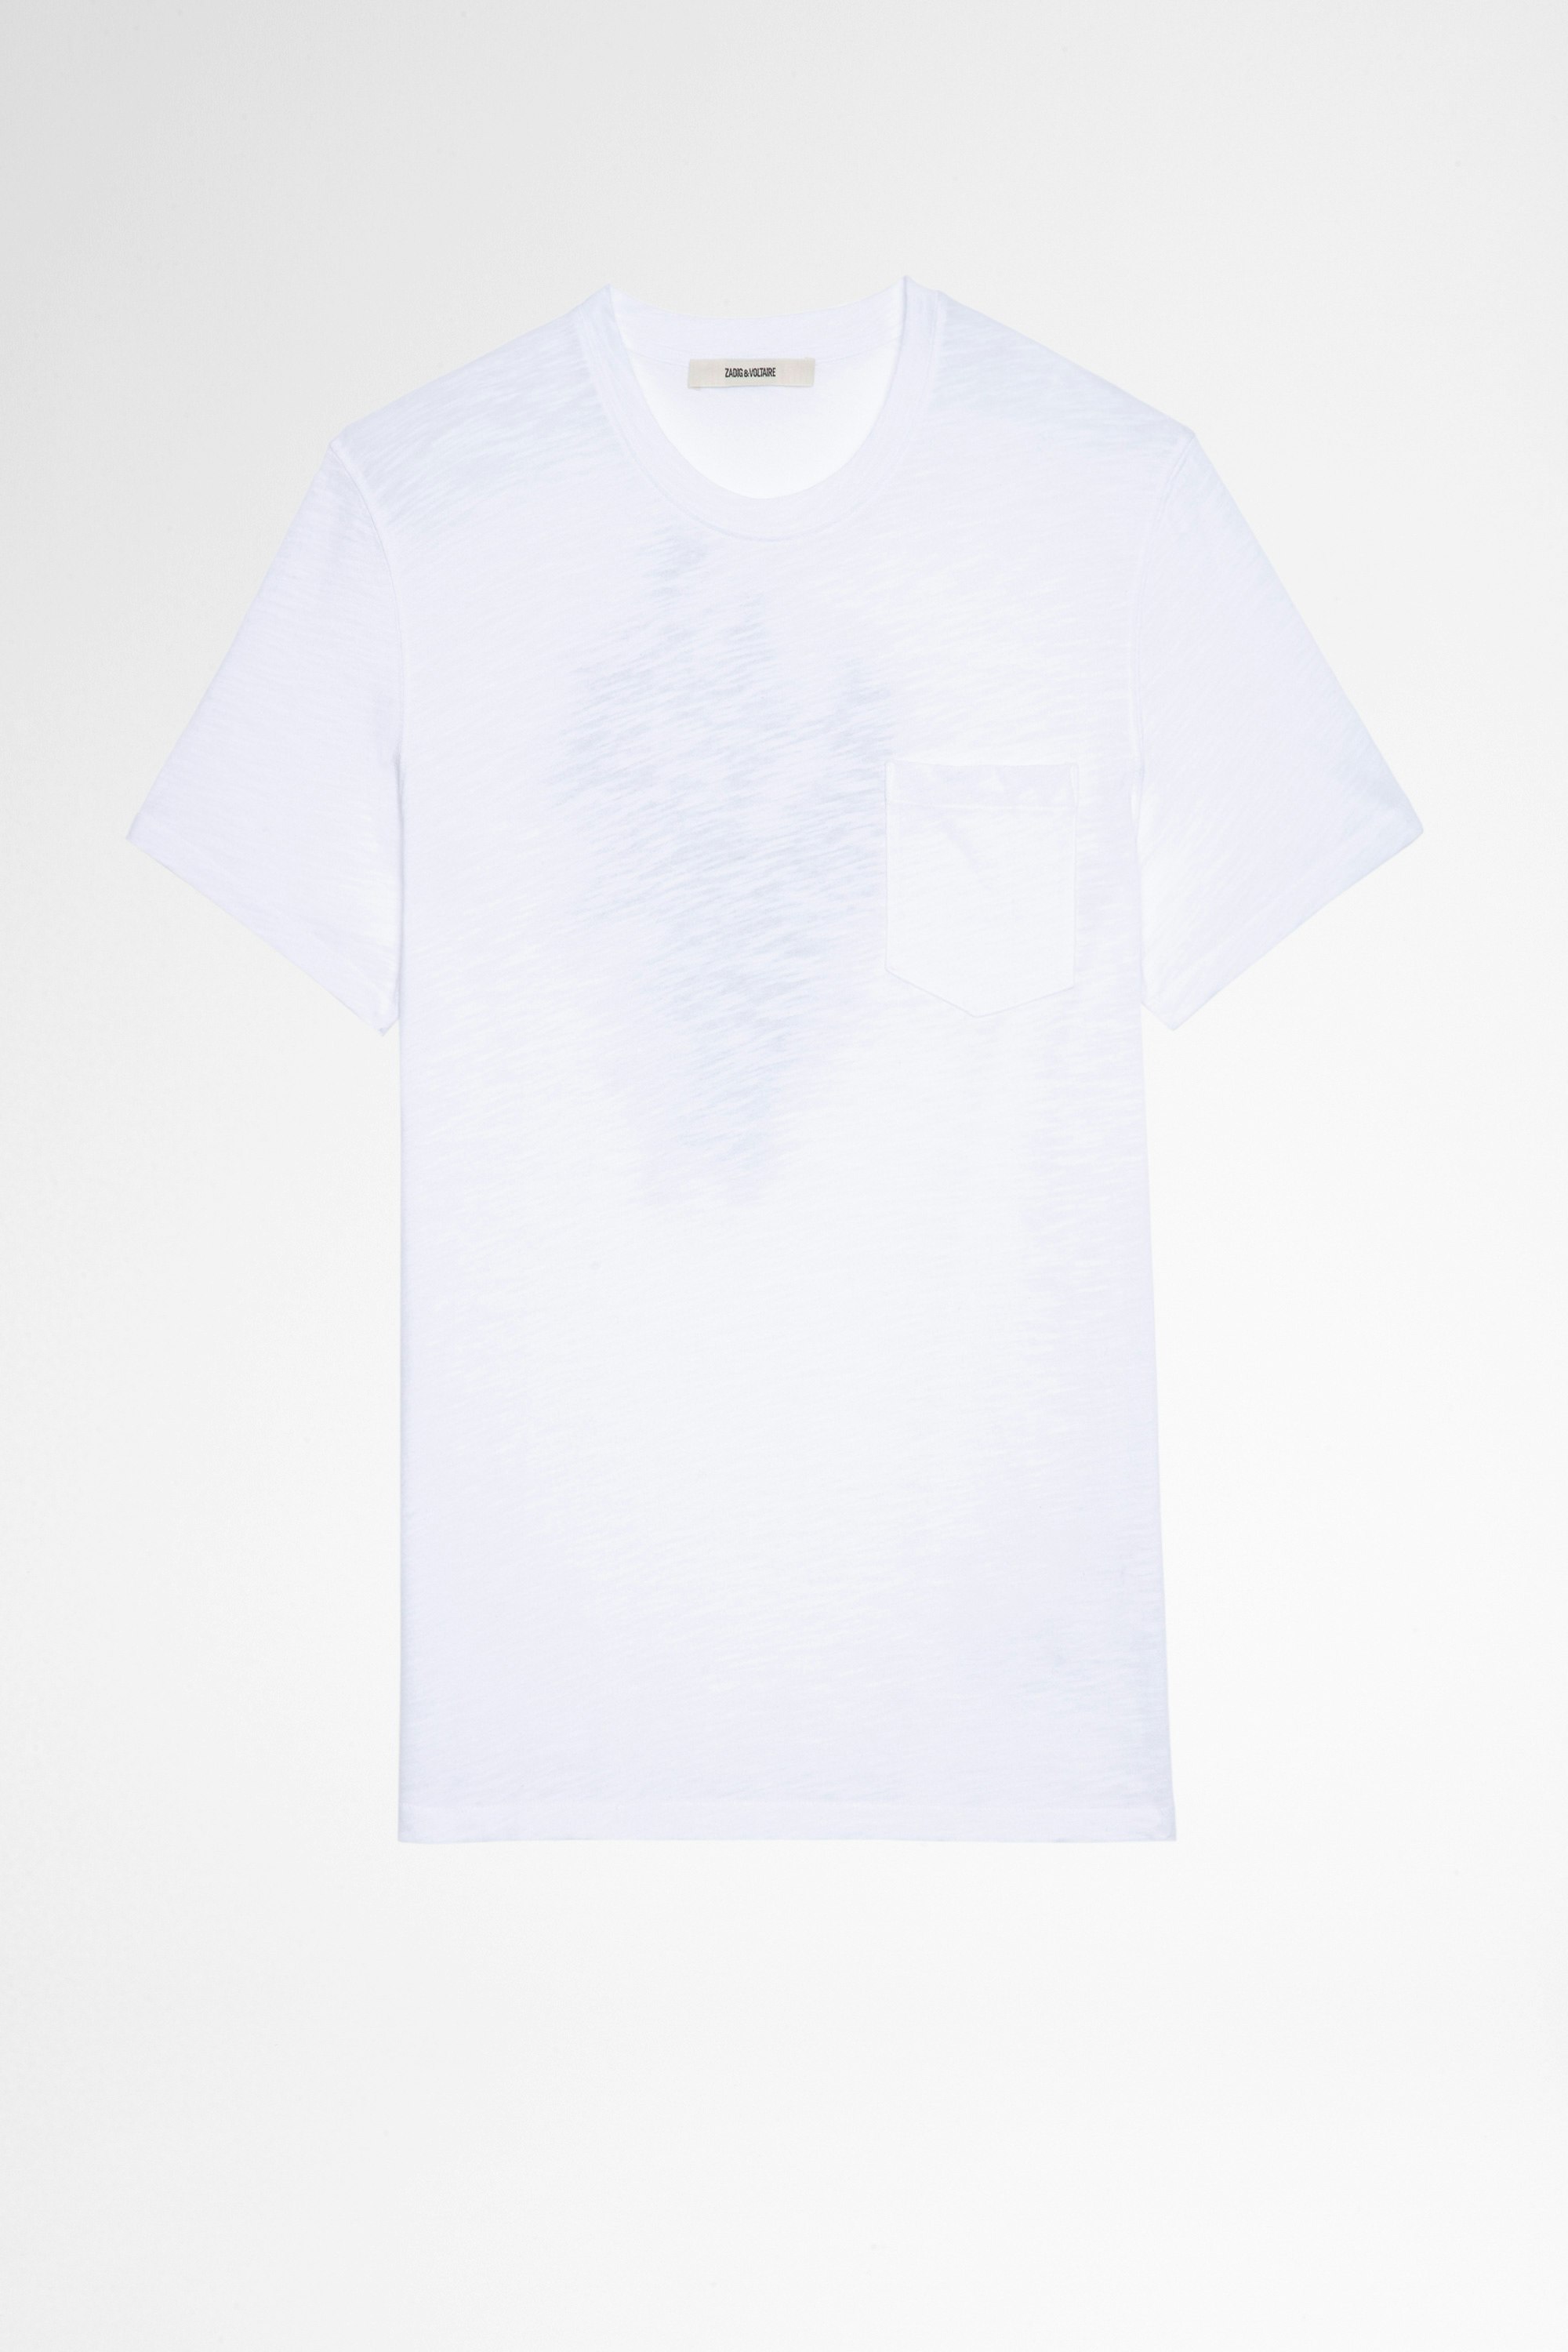 Camiseta Toby Camiseta blanca de algodón de manga corta para hombre